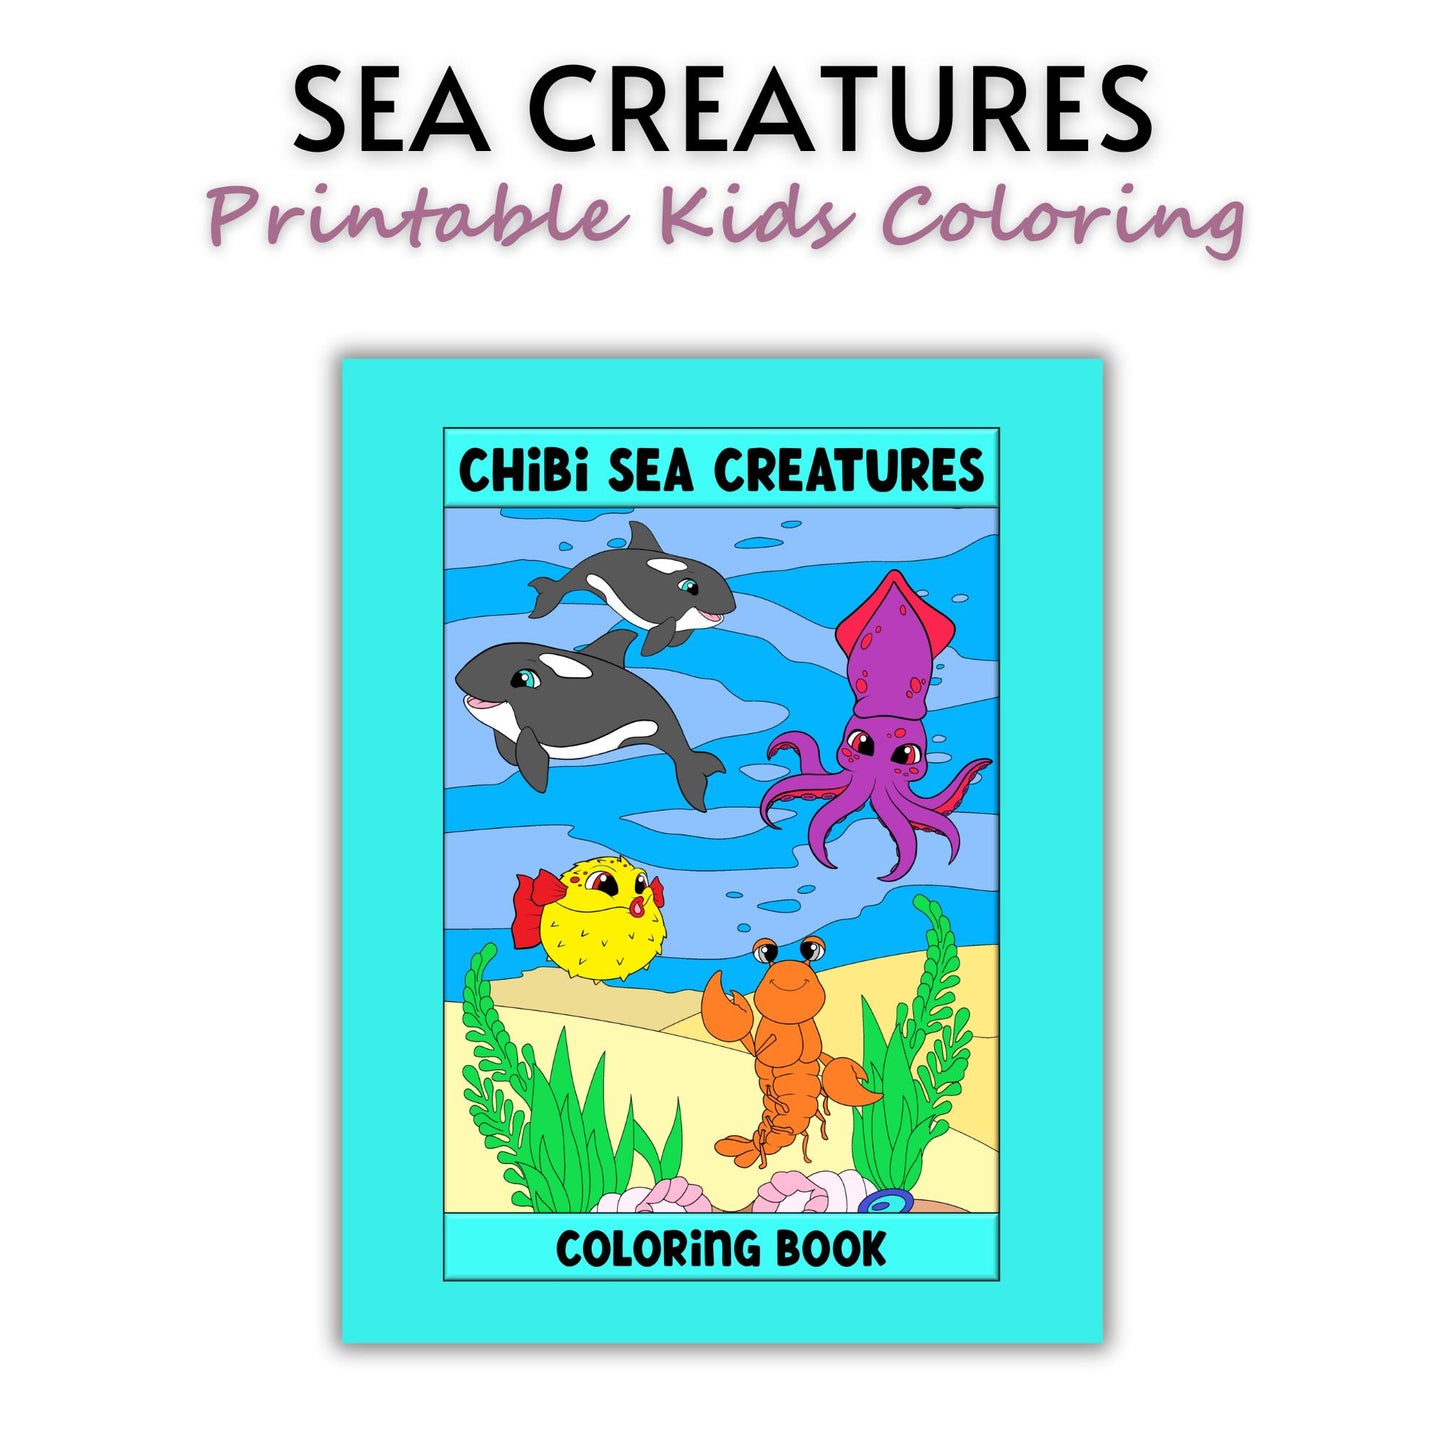 Chibi Sea Creatures Coloring Book